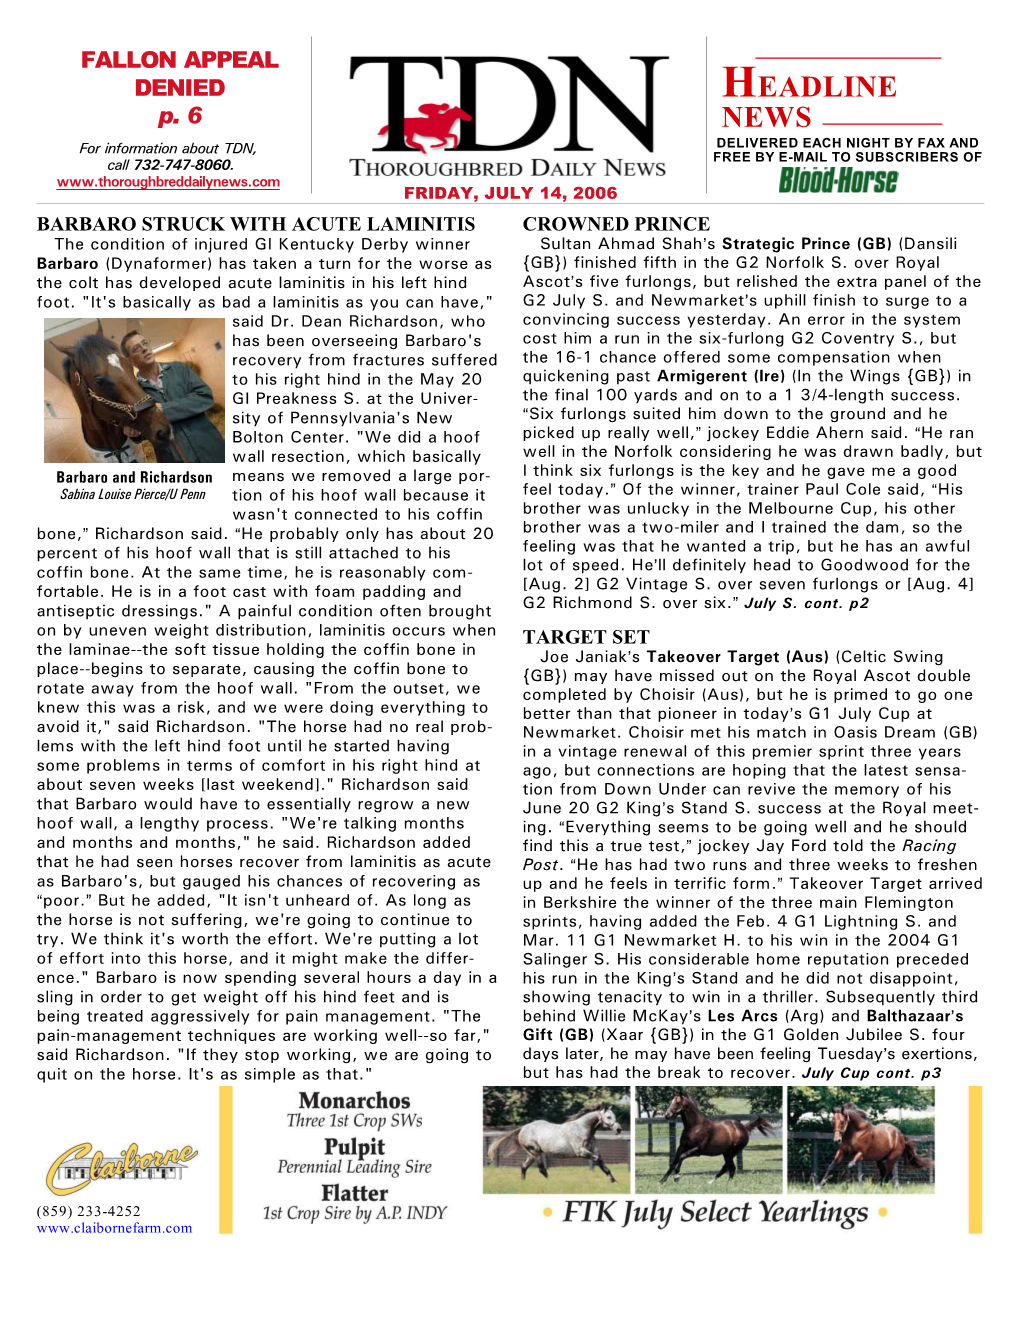 HEADLINE NEWS • 7/14/06 • PAGE 2 of 8